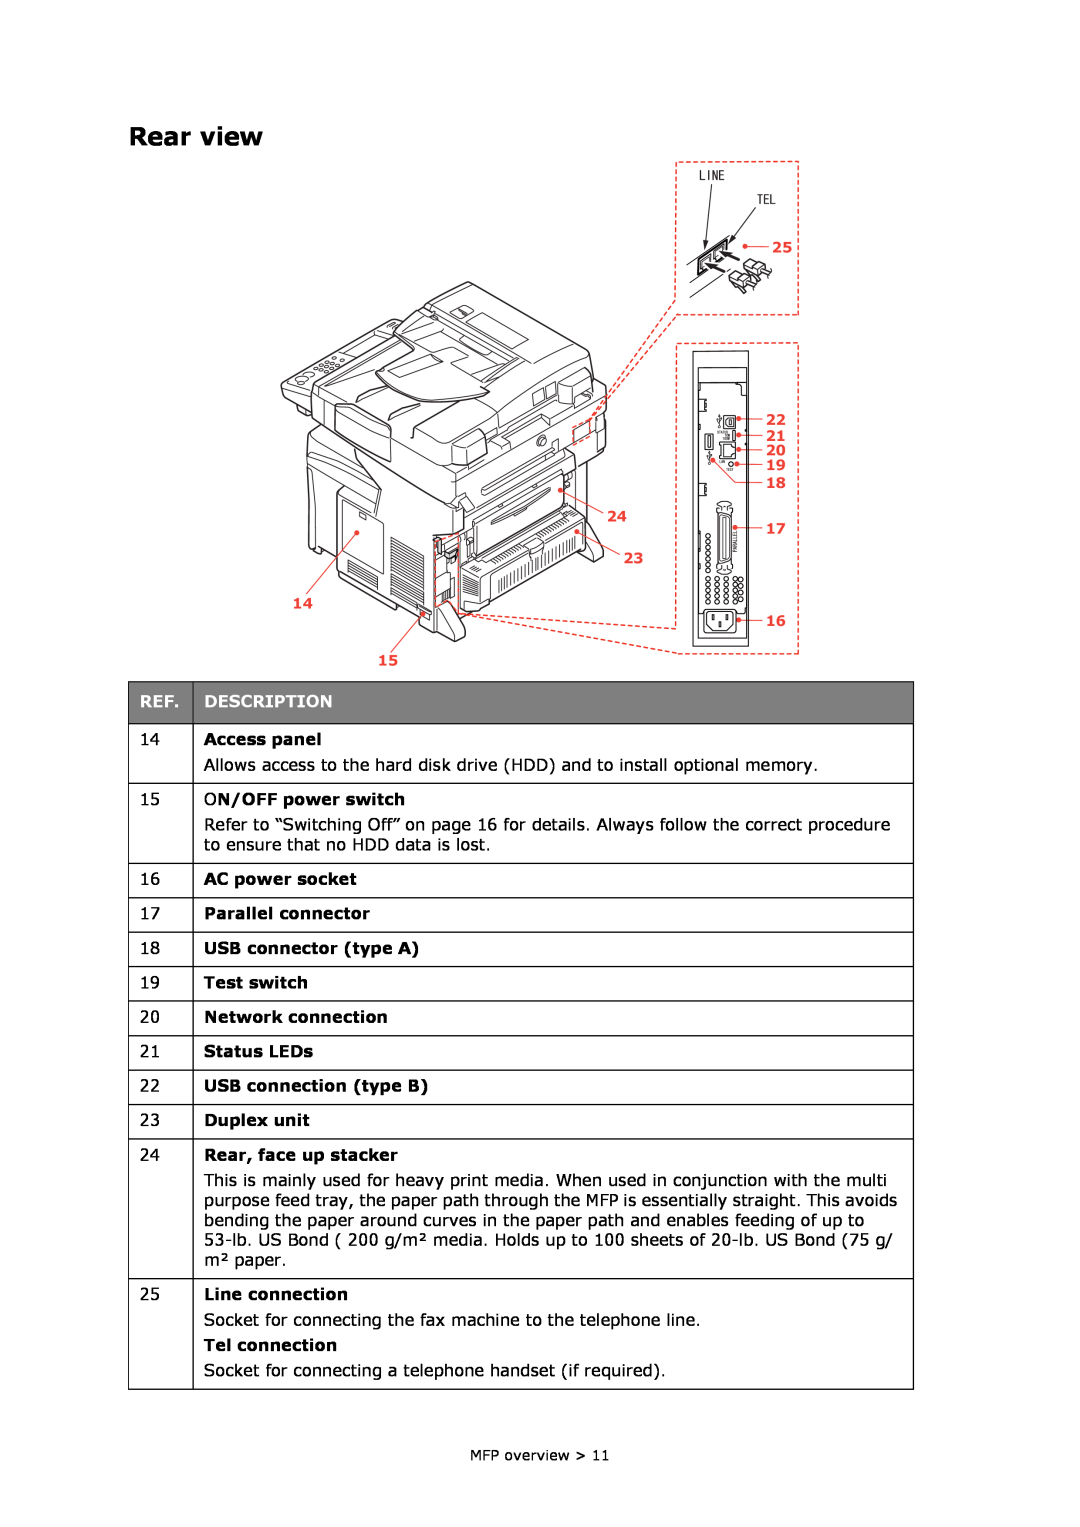 Oki MC860n MFP manual Rear view, Description 